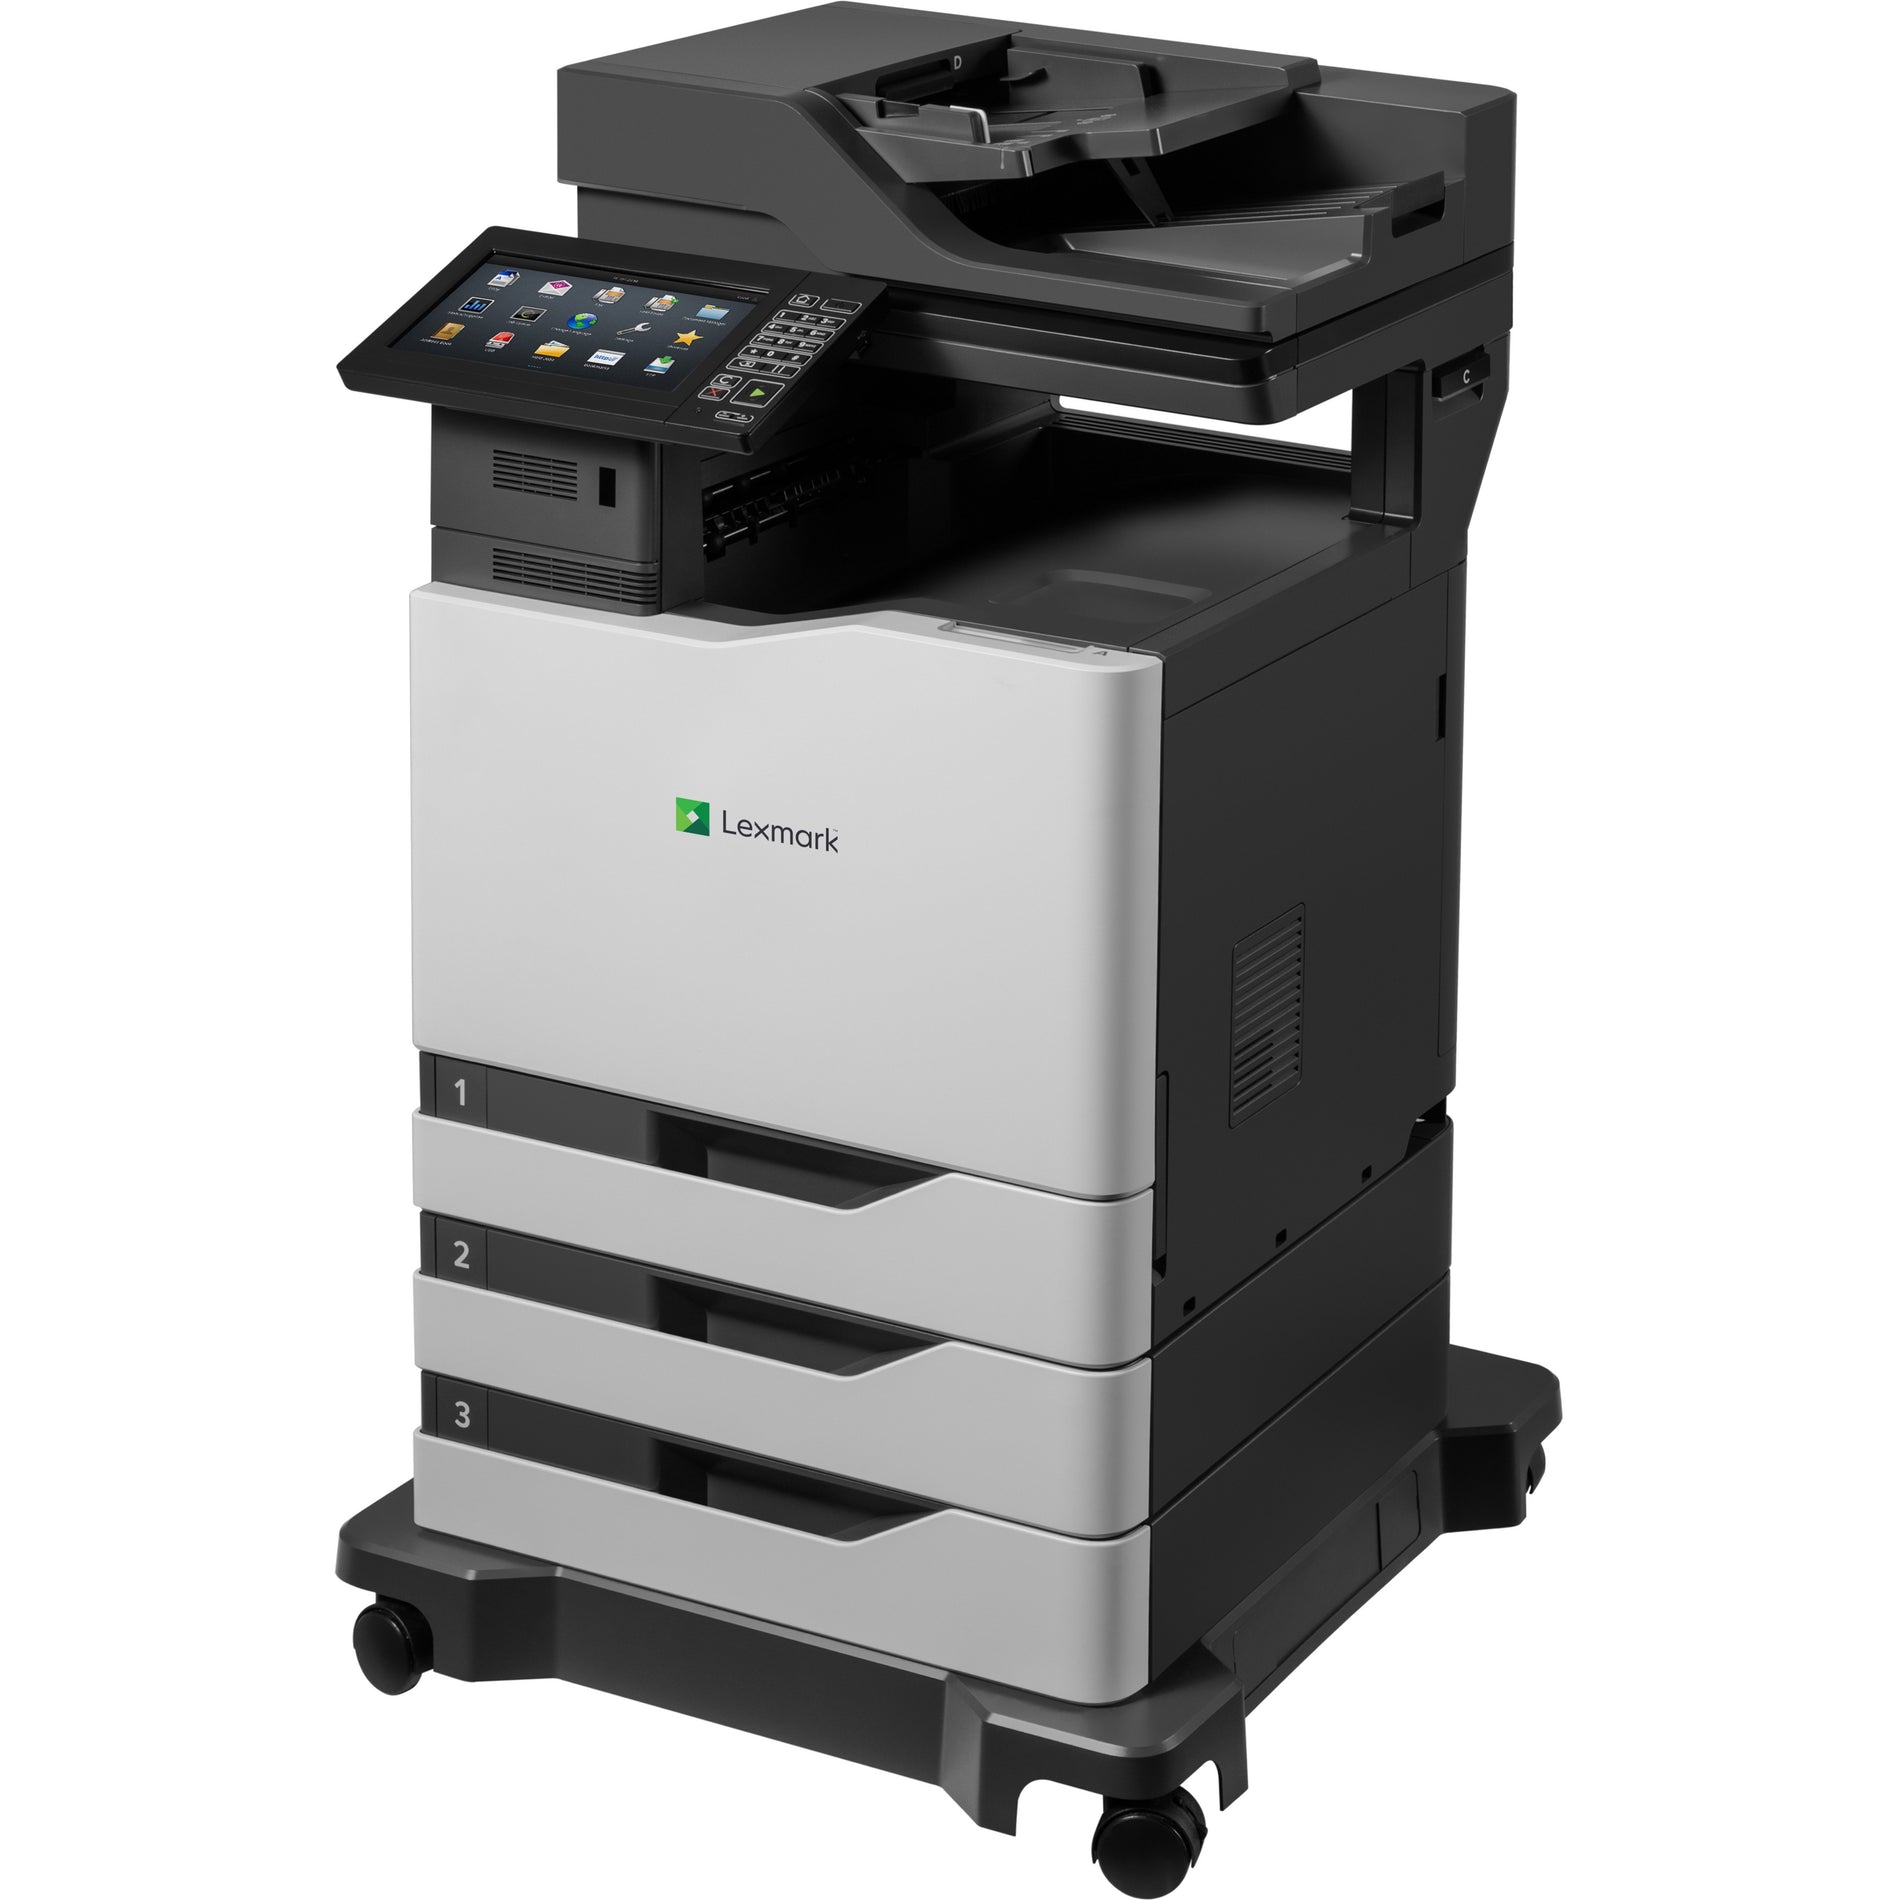 Lexmark 42KT141 CX825dte Laser Multifunction Printer - Color, Automatic Duplex Printing, 55 ppm, 2400 x 600 dpi